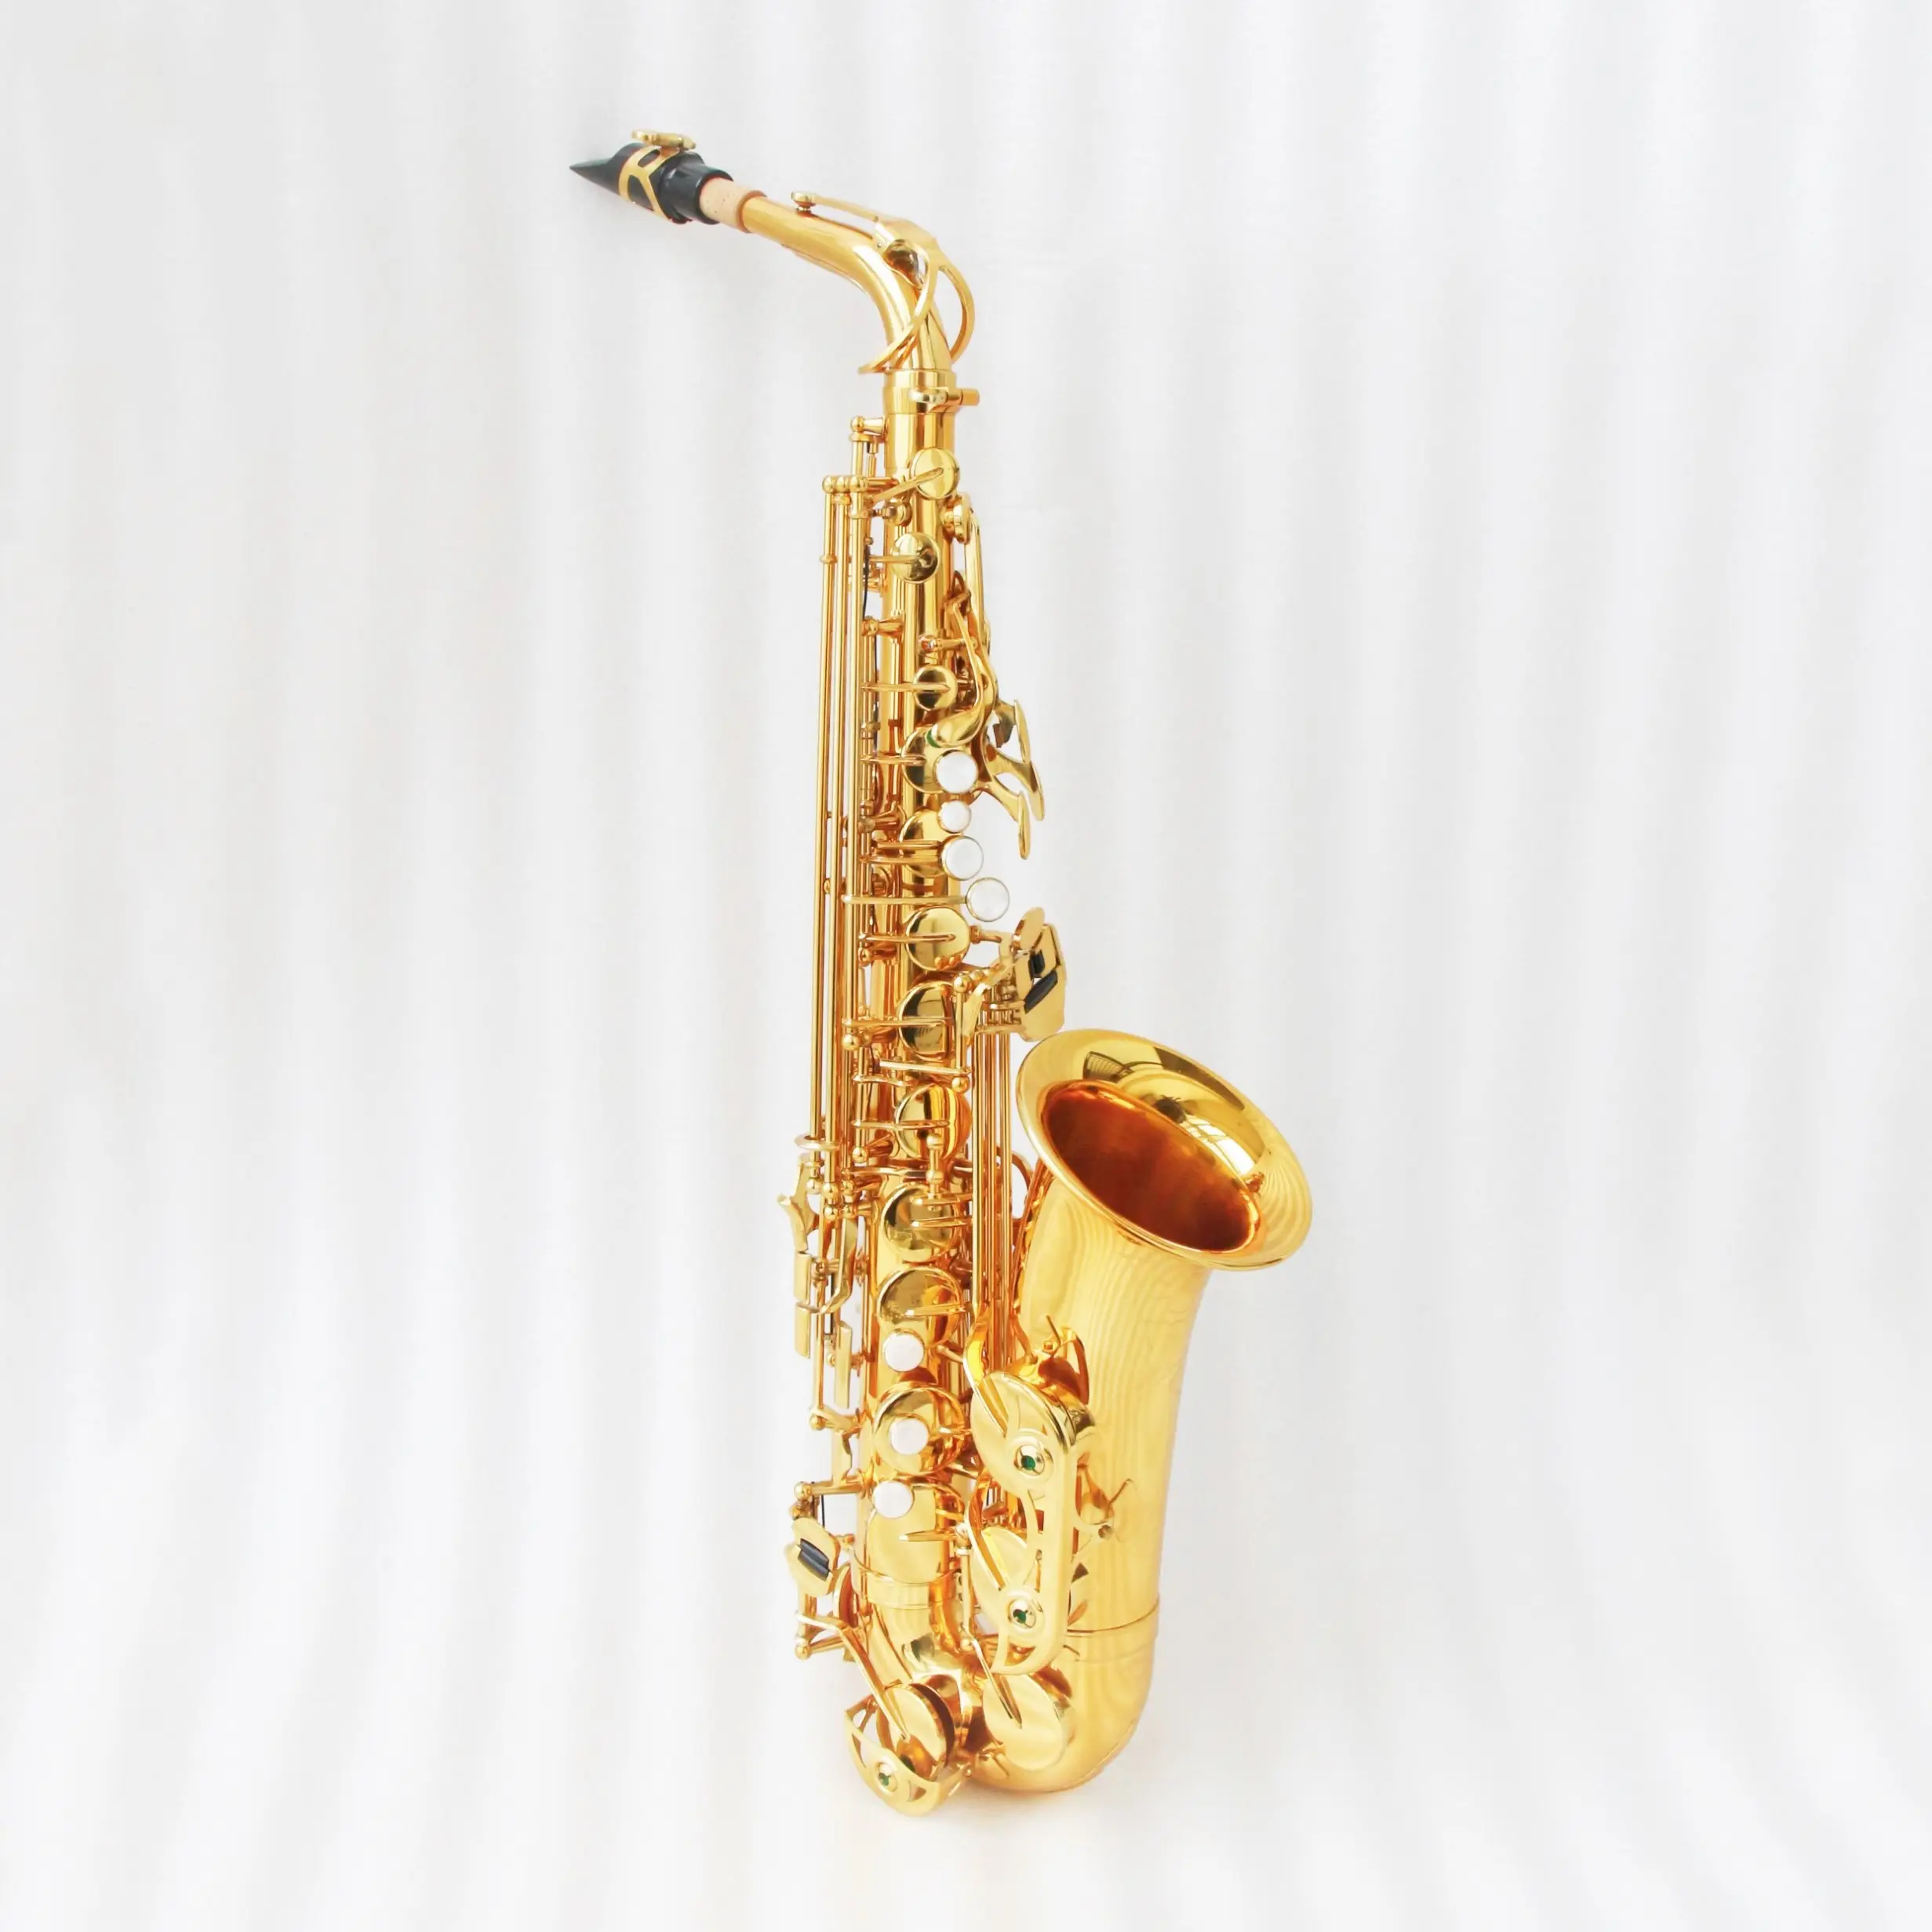 yas 62 alto saxophone famous brand style saxophone alto high cost performance alto saxophone